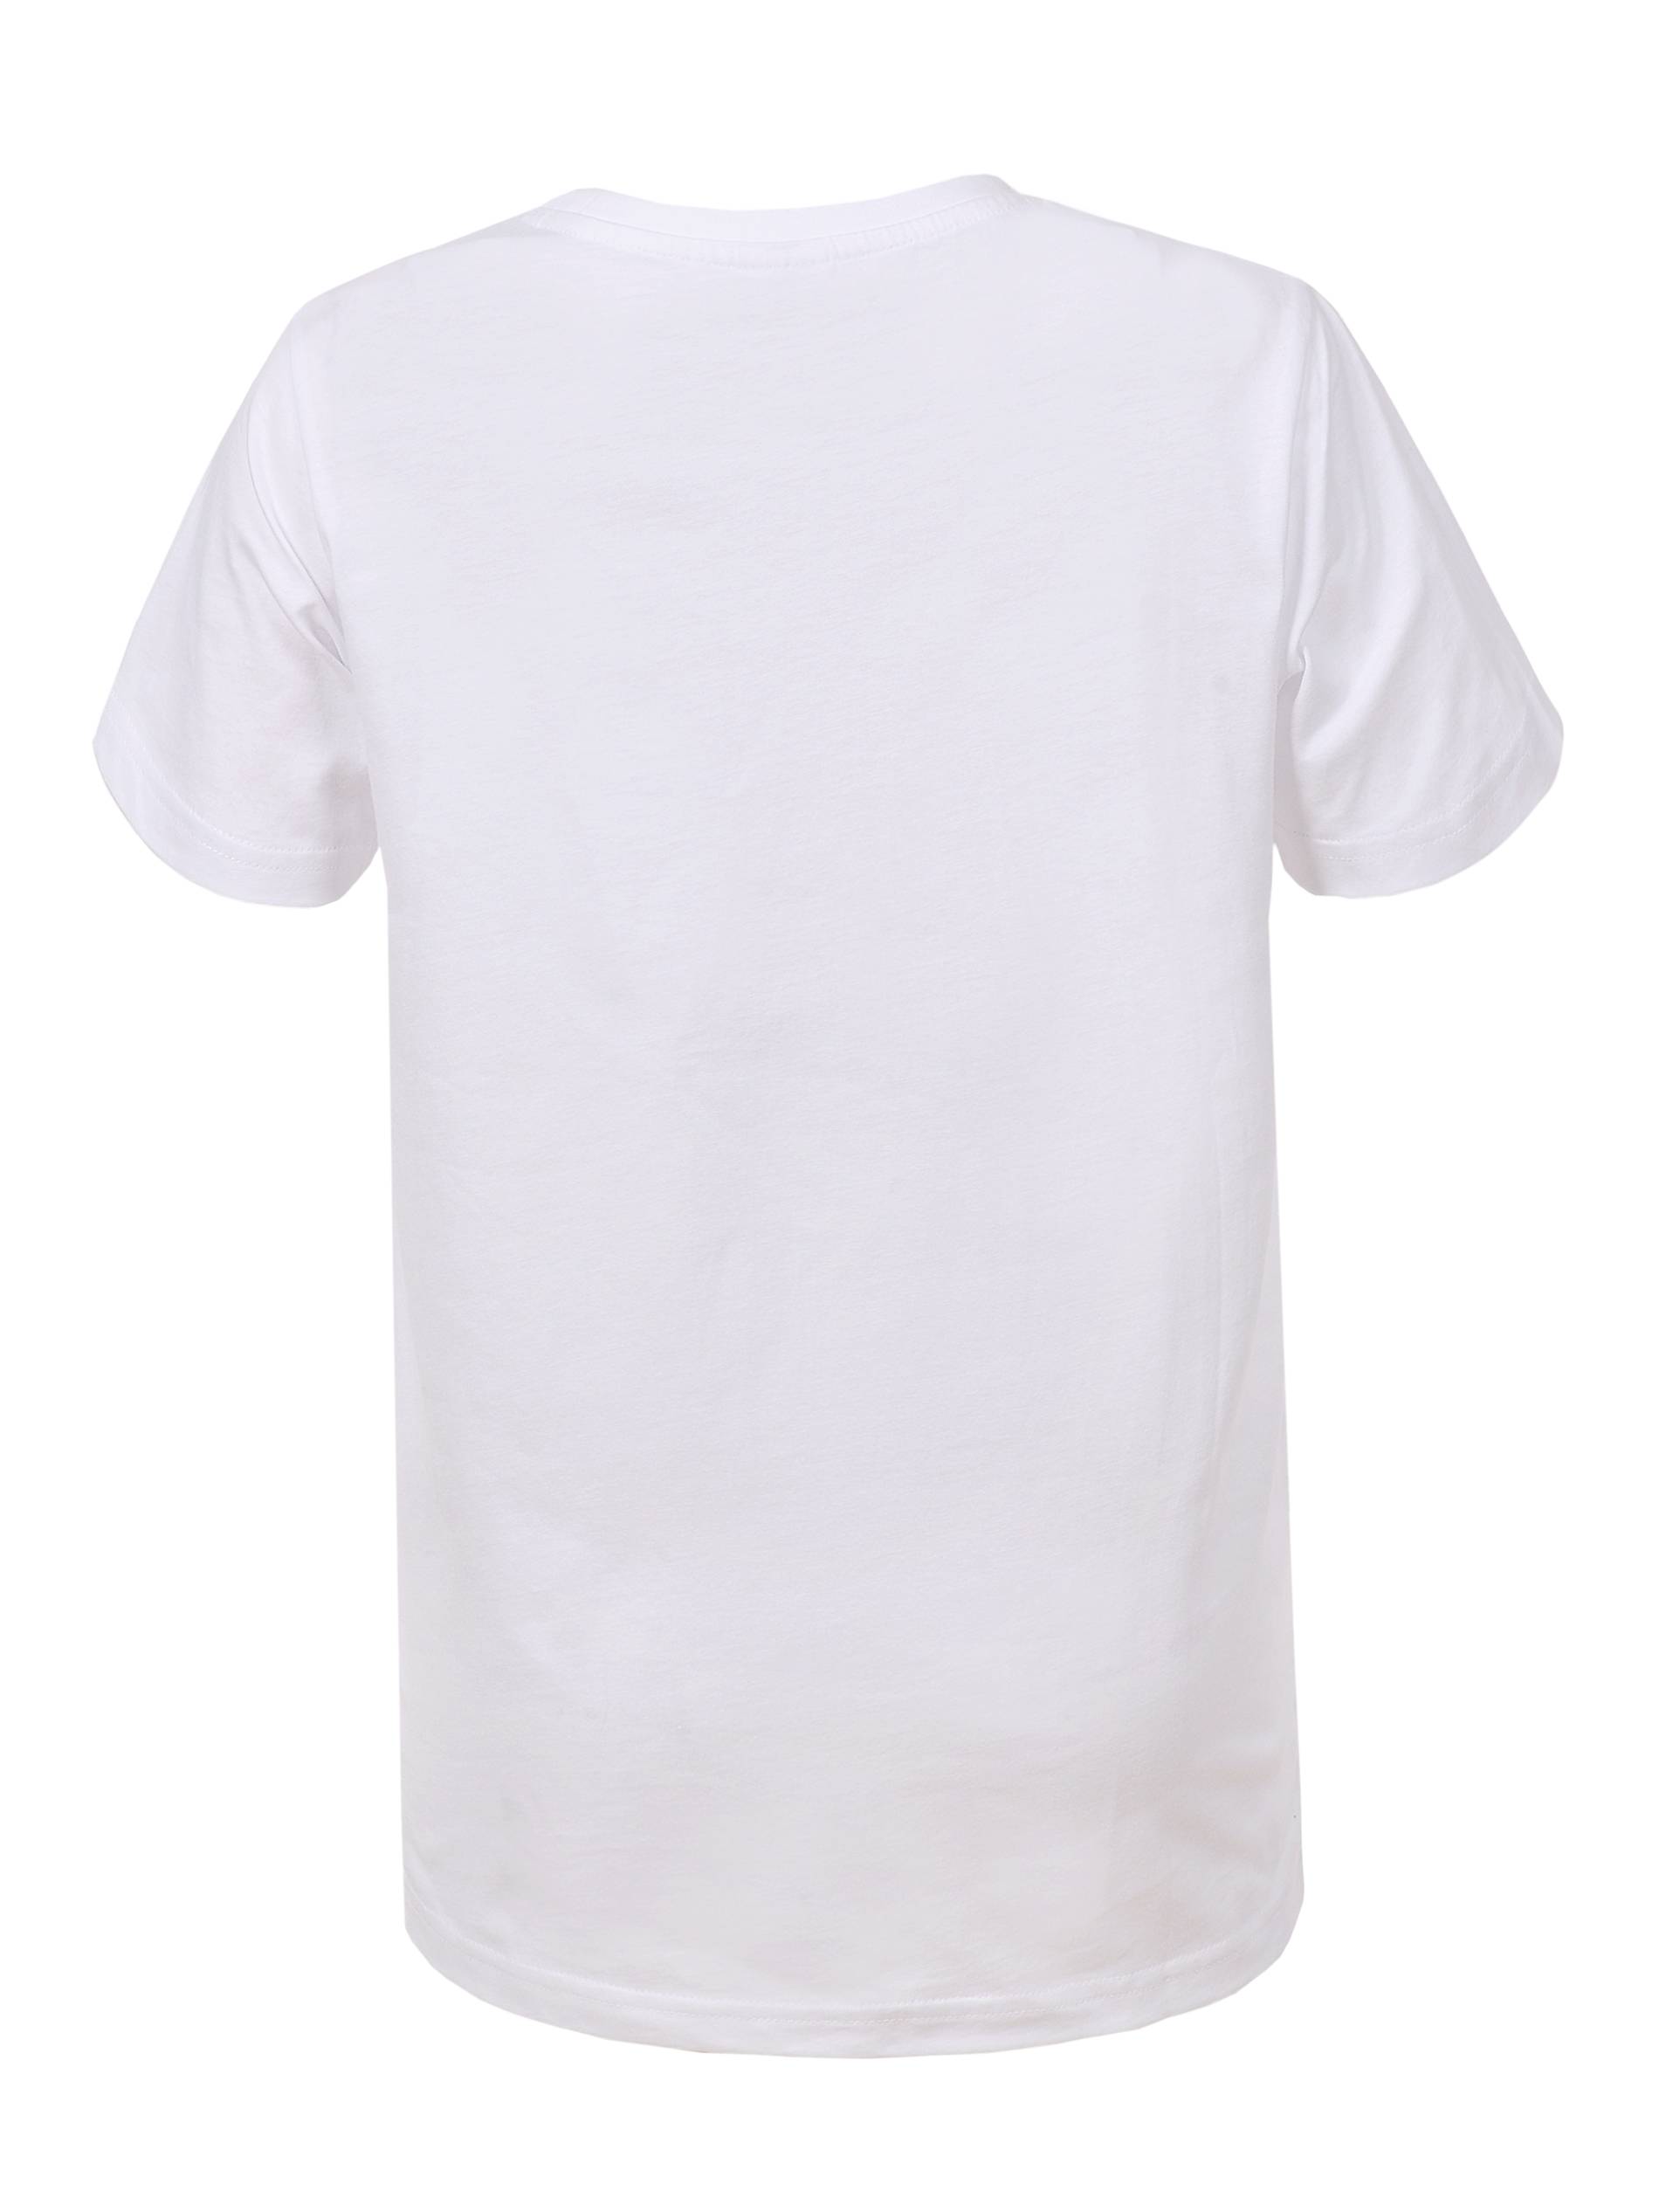 Fehér rövid ujjú póló - Rainbow Trend Shop